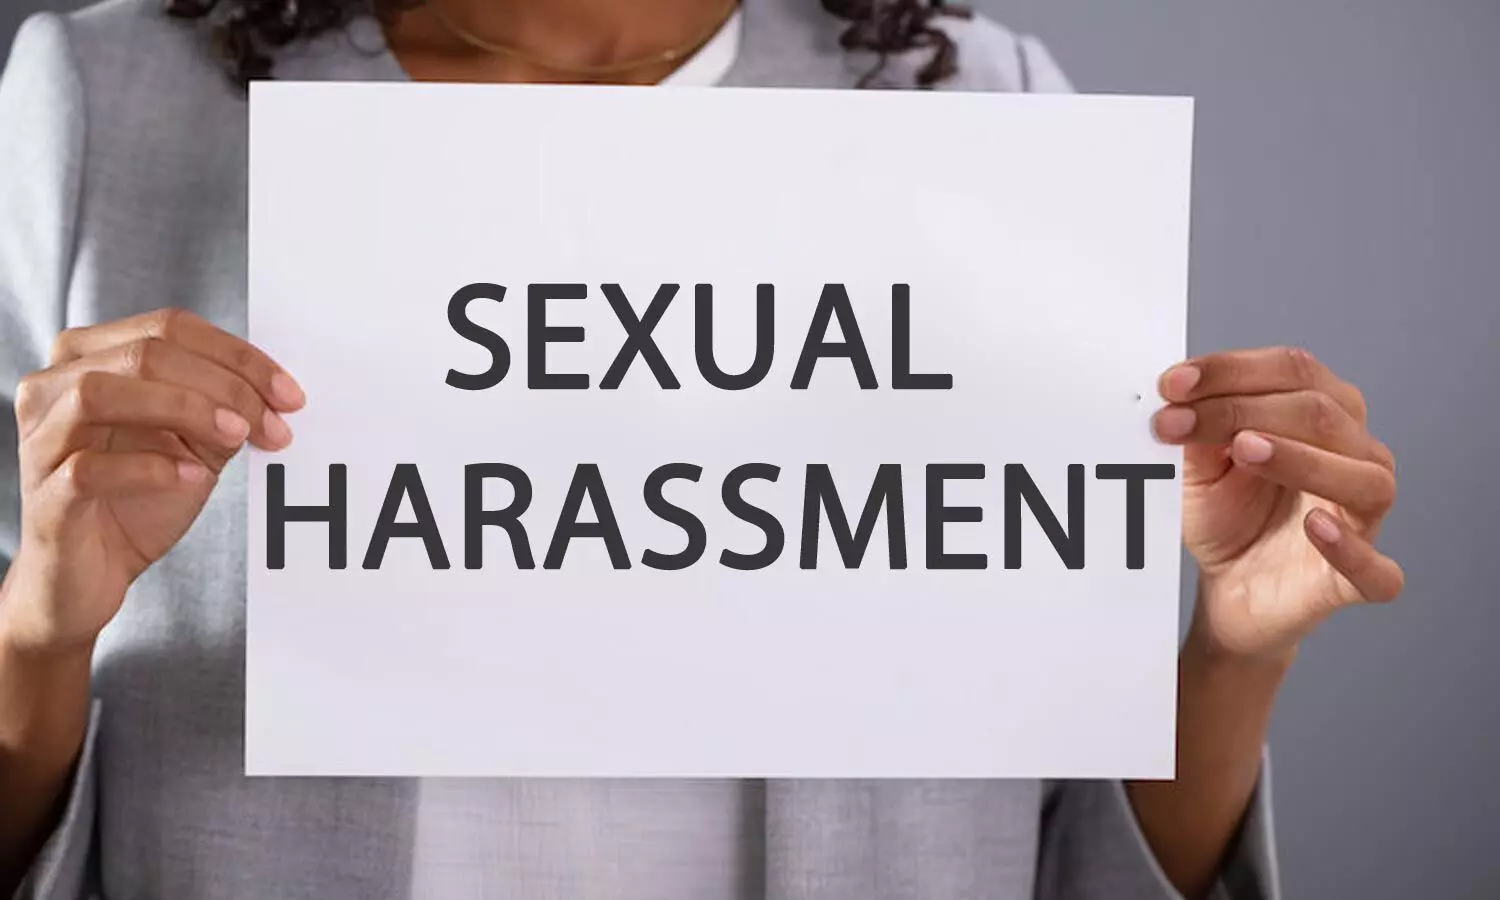 AP: Civil Surgeon arrested after patient alleges sexual harassment